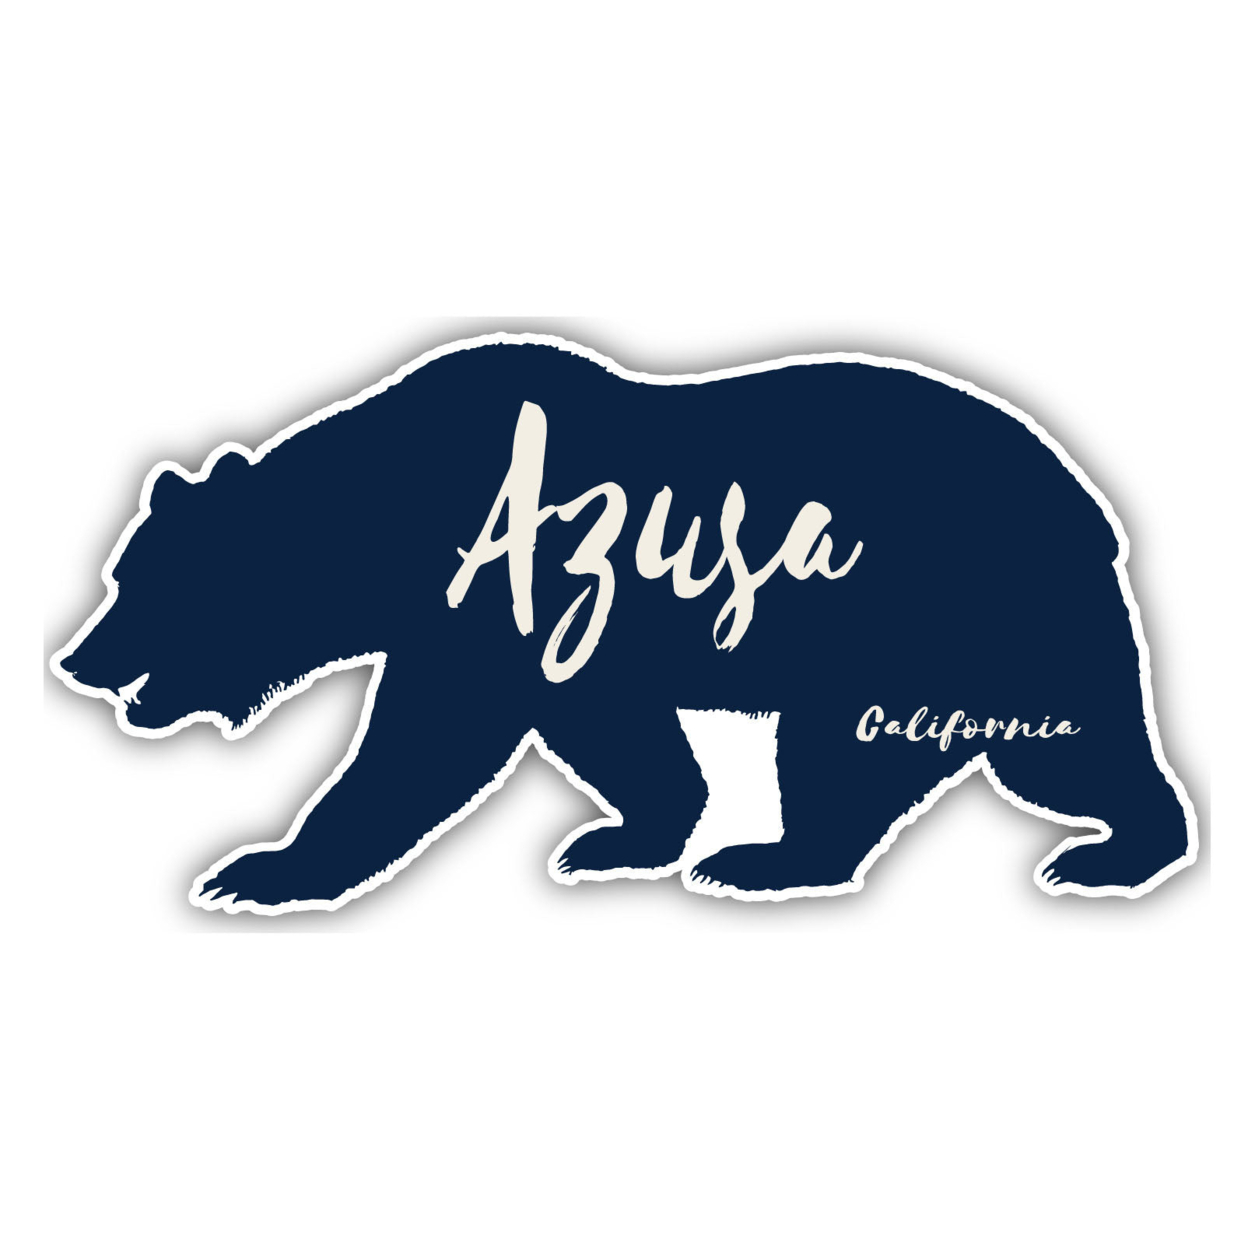 Azusa California Souvenir Decorative Stickers (Choose Theme And Size) - 4-Pack, 10-Inch, Bear